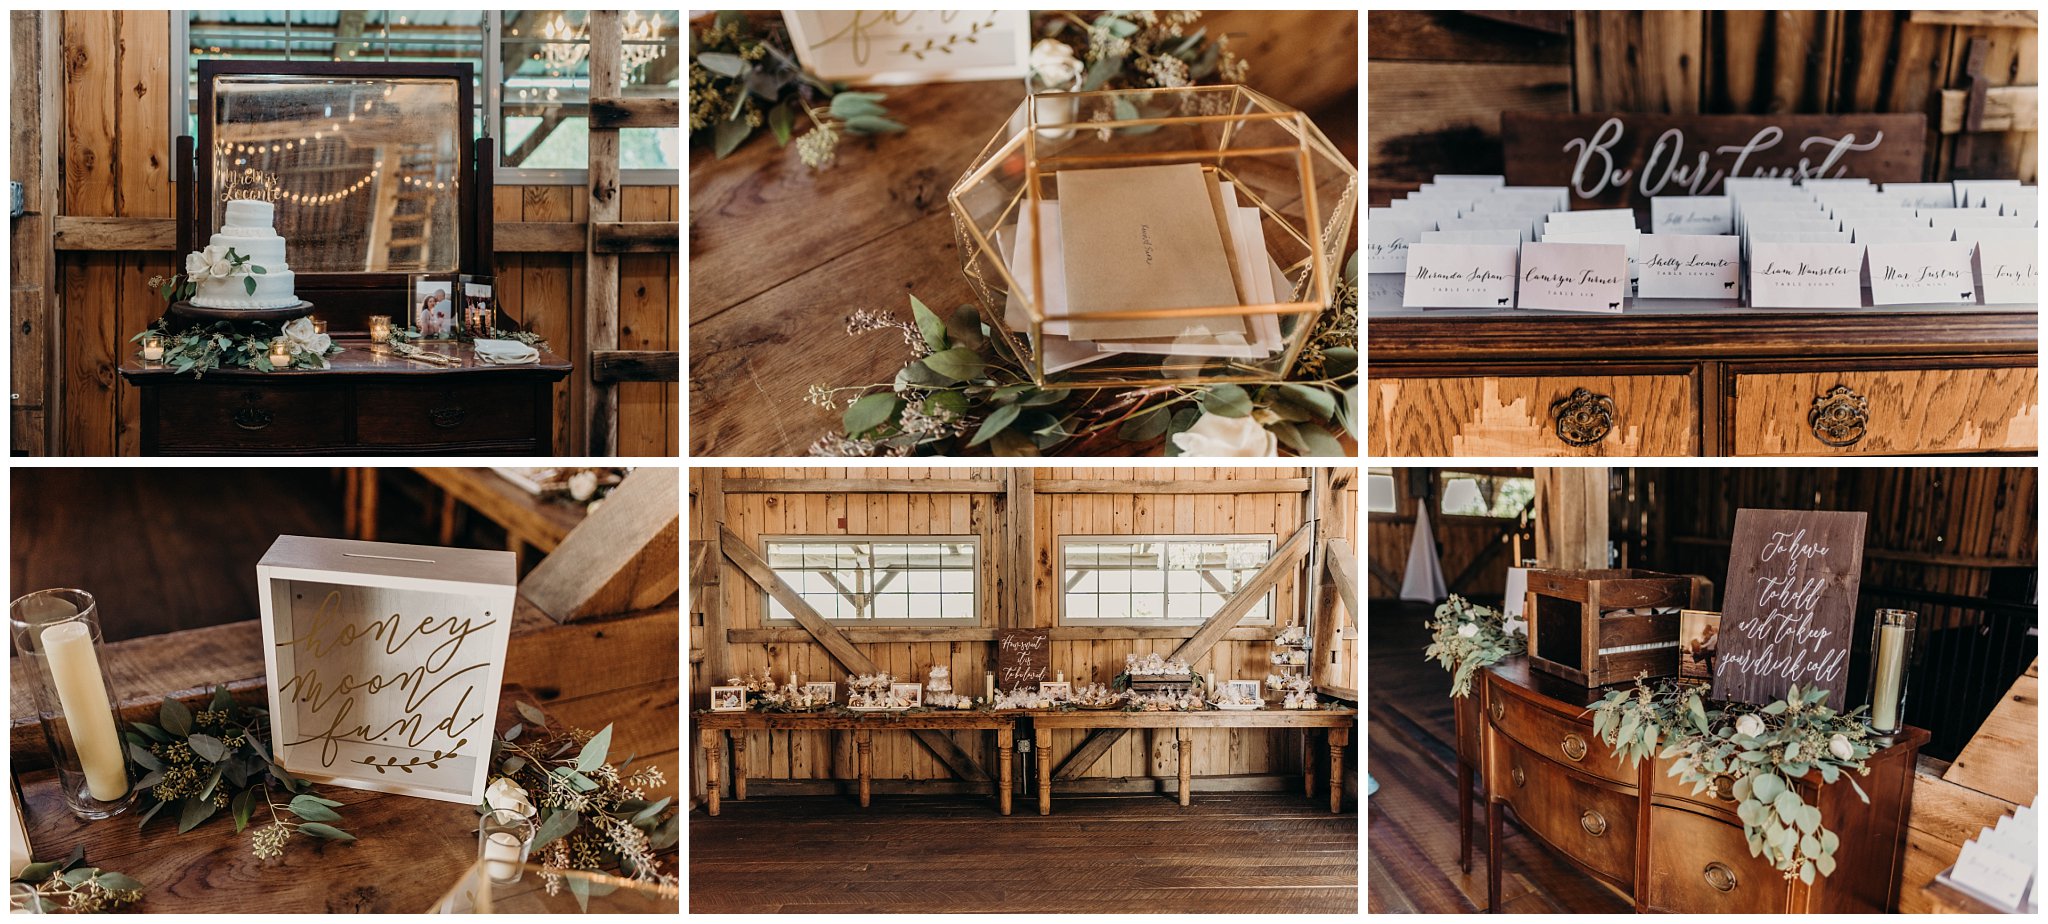 beautiful wedding details at Rustic Acres Farm